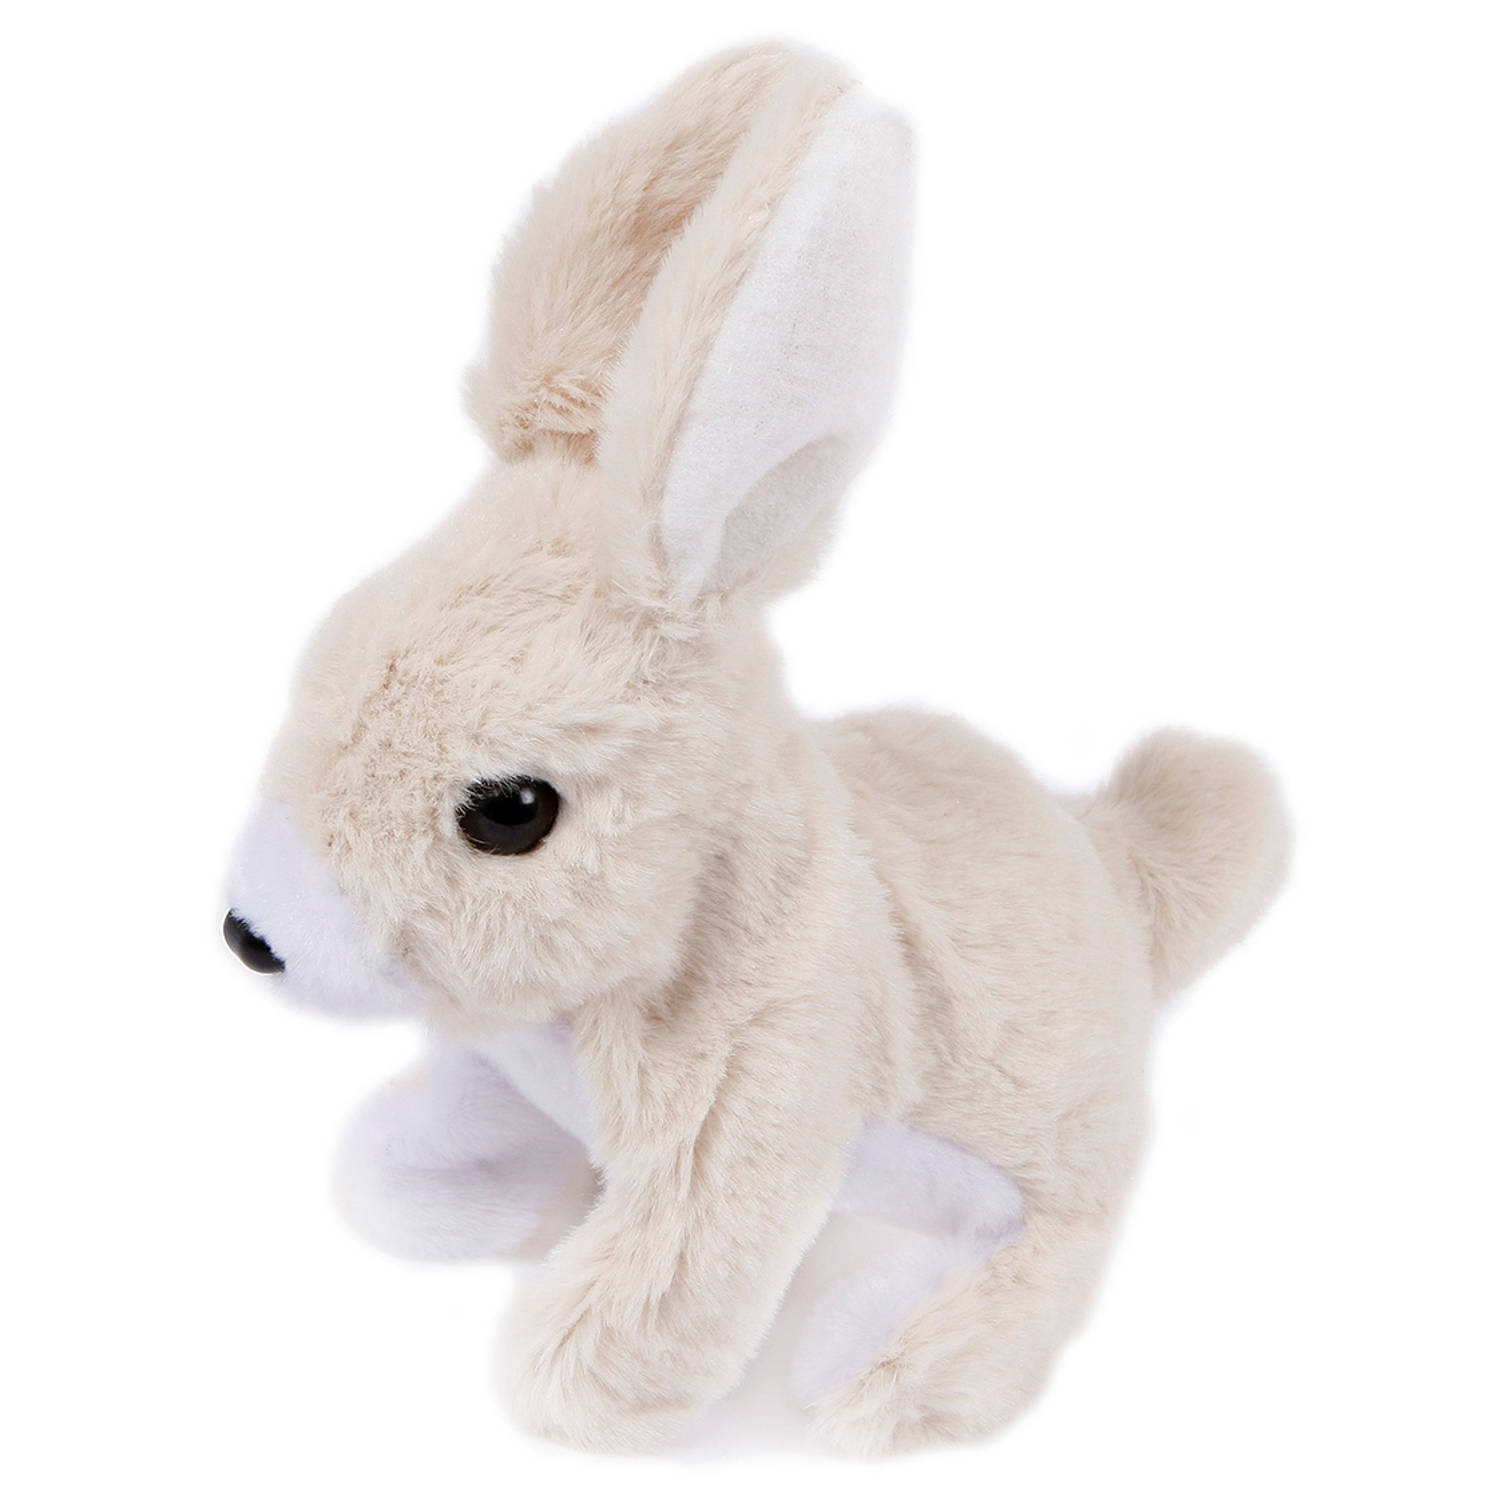 Take Me Home knuffel konijn junior 15,5 cm pluche beige/wit